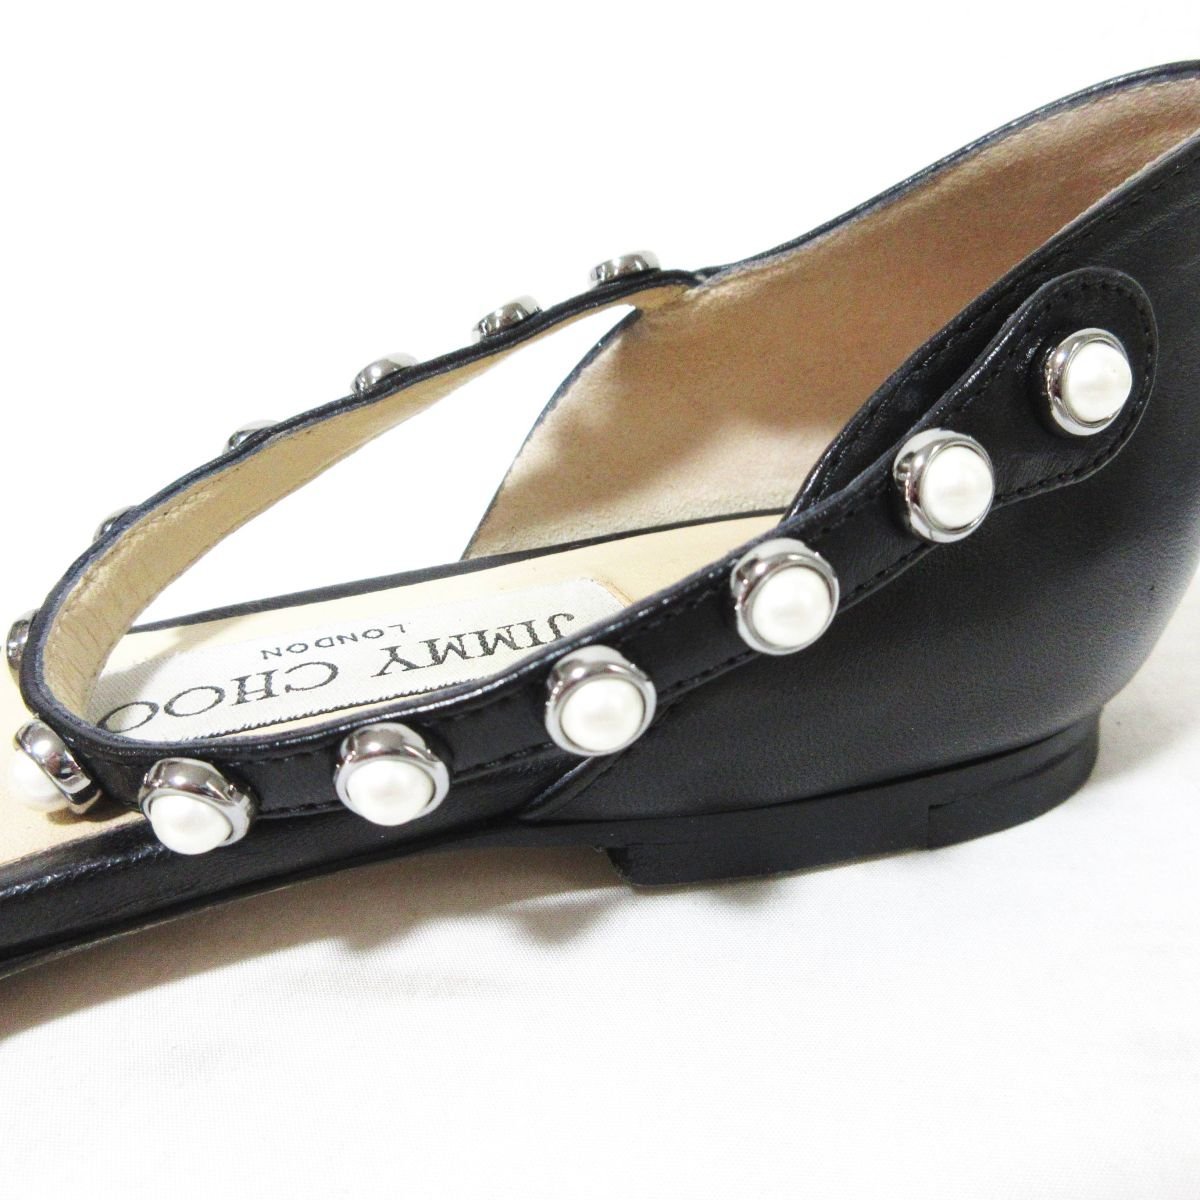  beautiful goods Jimmy Choo LEEMA leather po Inte dotu fake pearl strap flat shoes pumps 36 1/2 approximately 23.5cm black black 